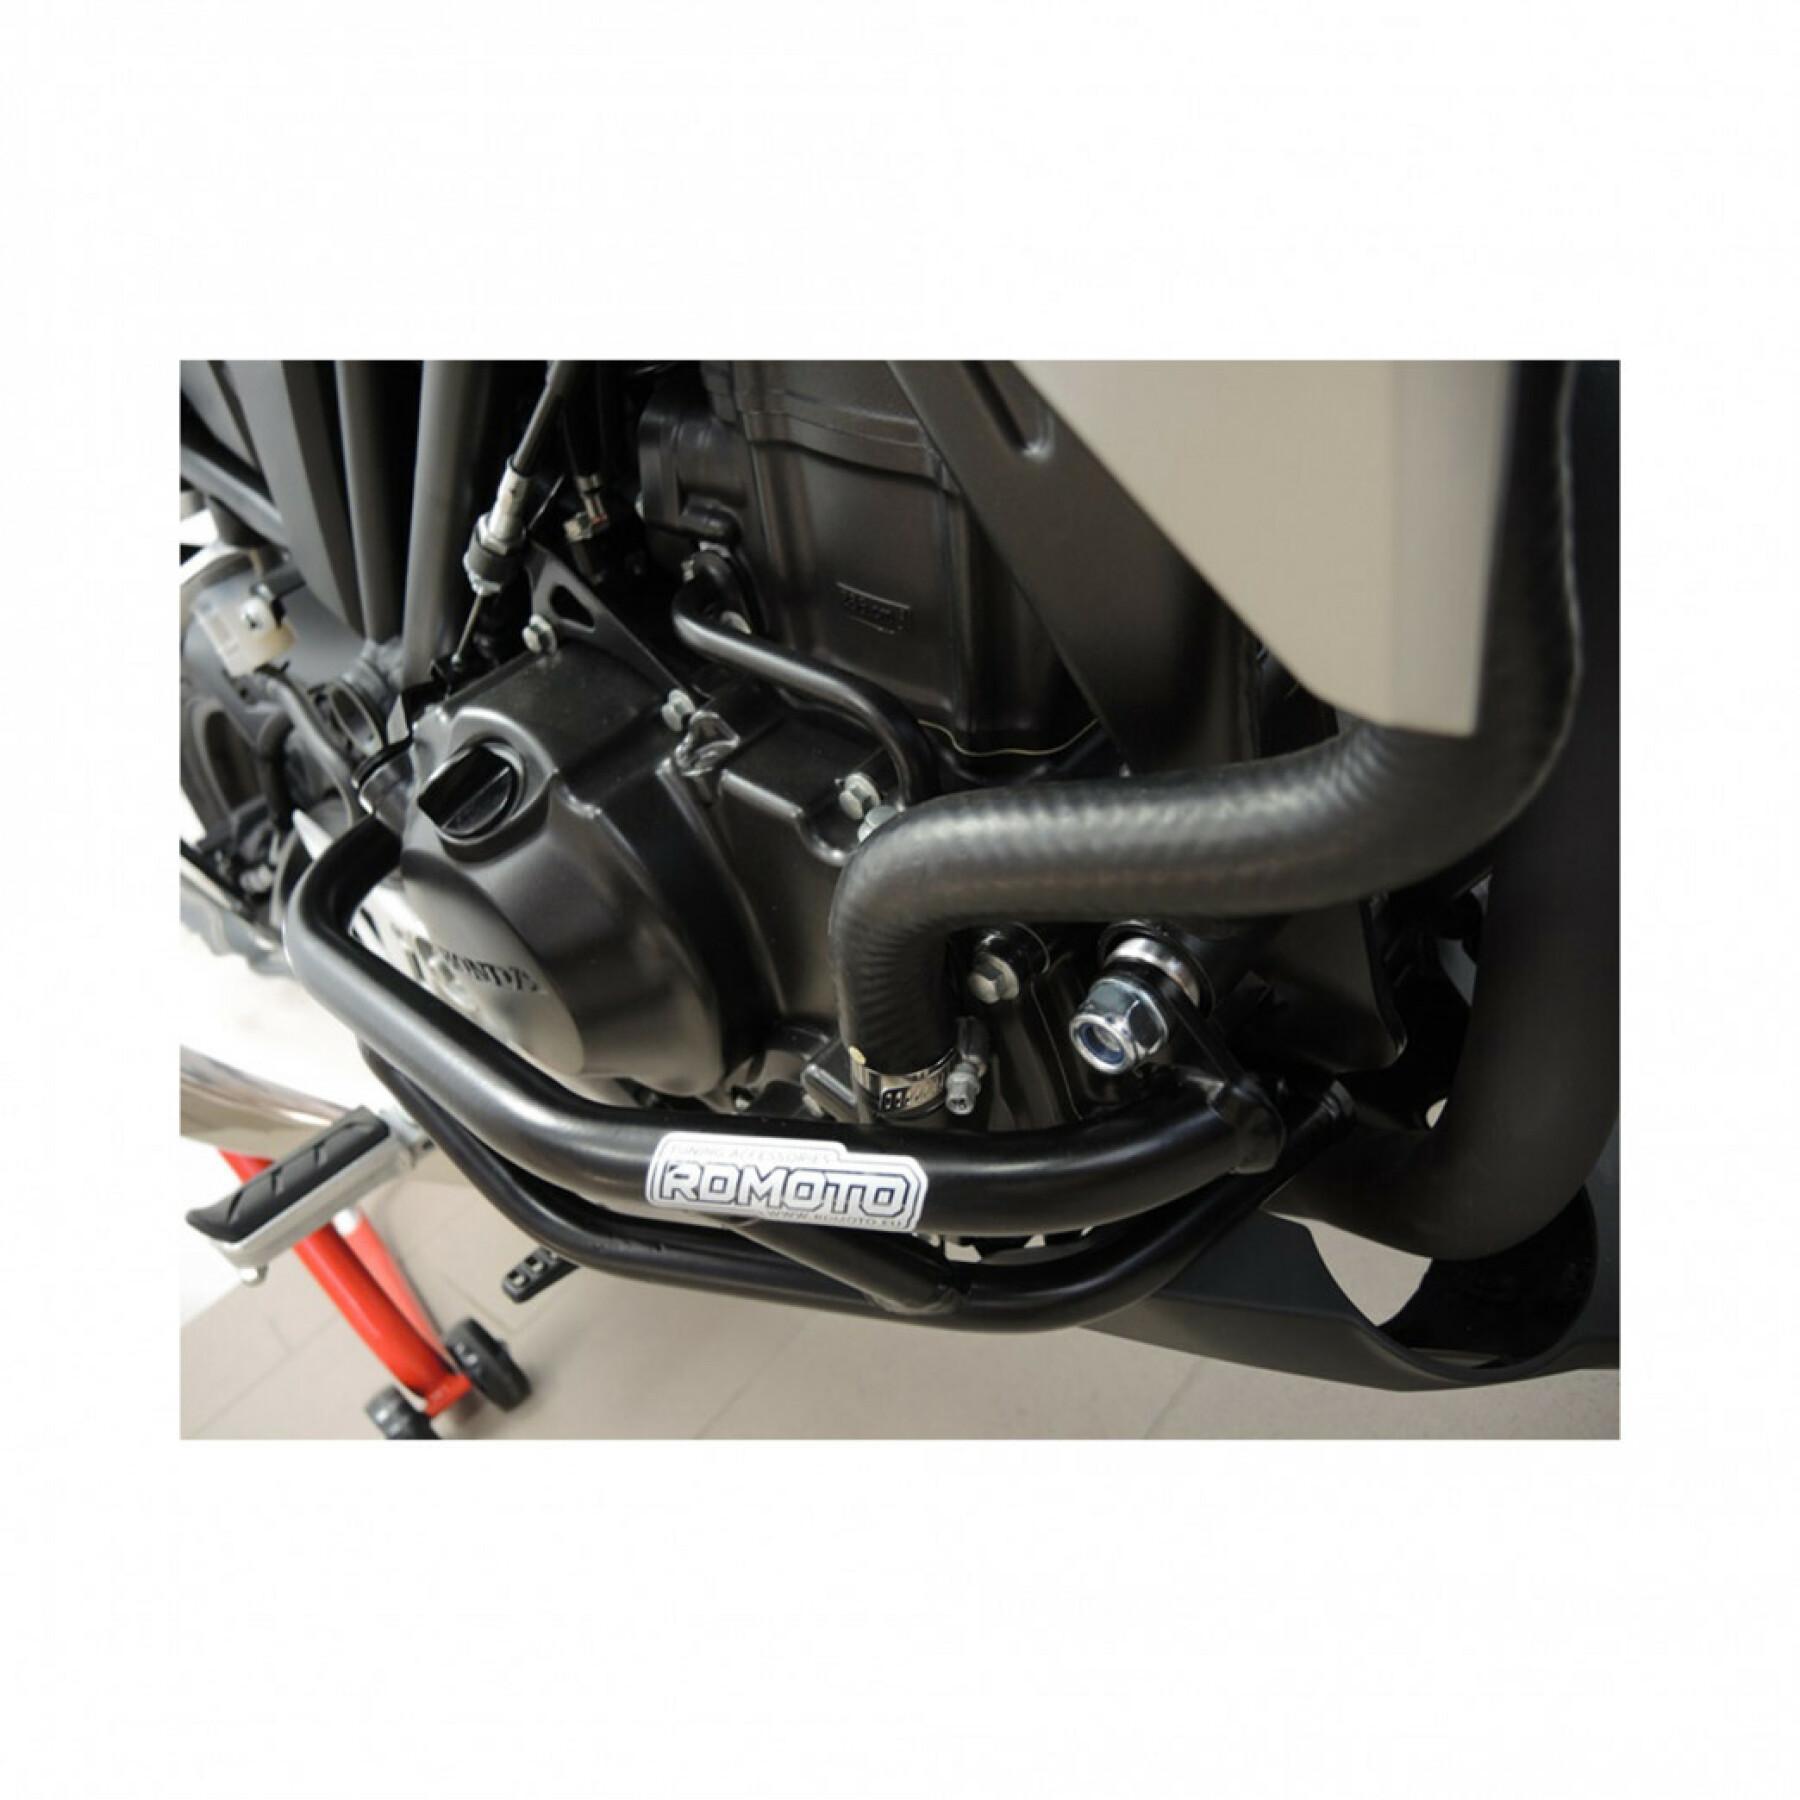 Motorcycle tank bag RD Moto Honda Cb300R '18 -'19